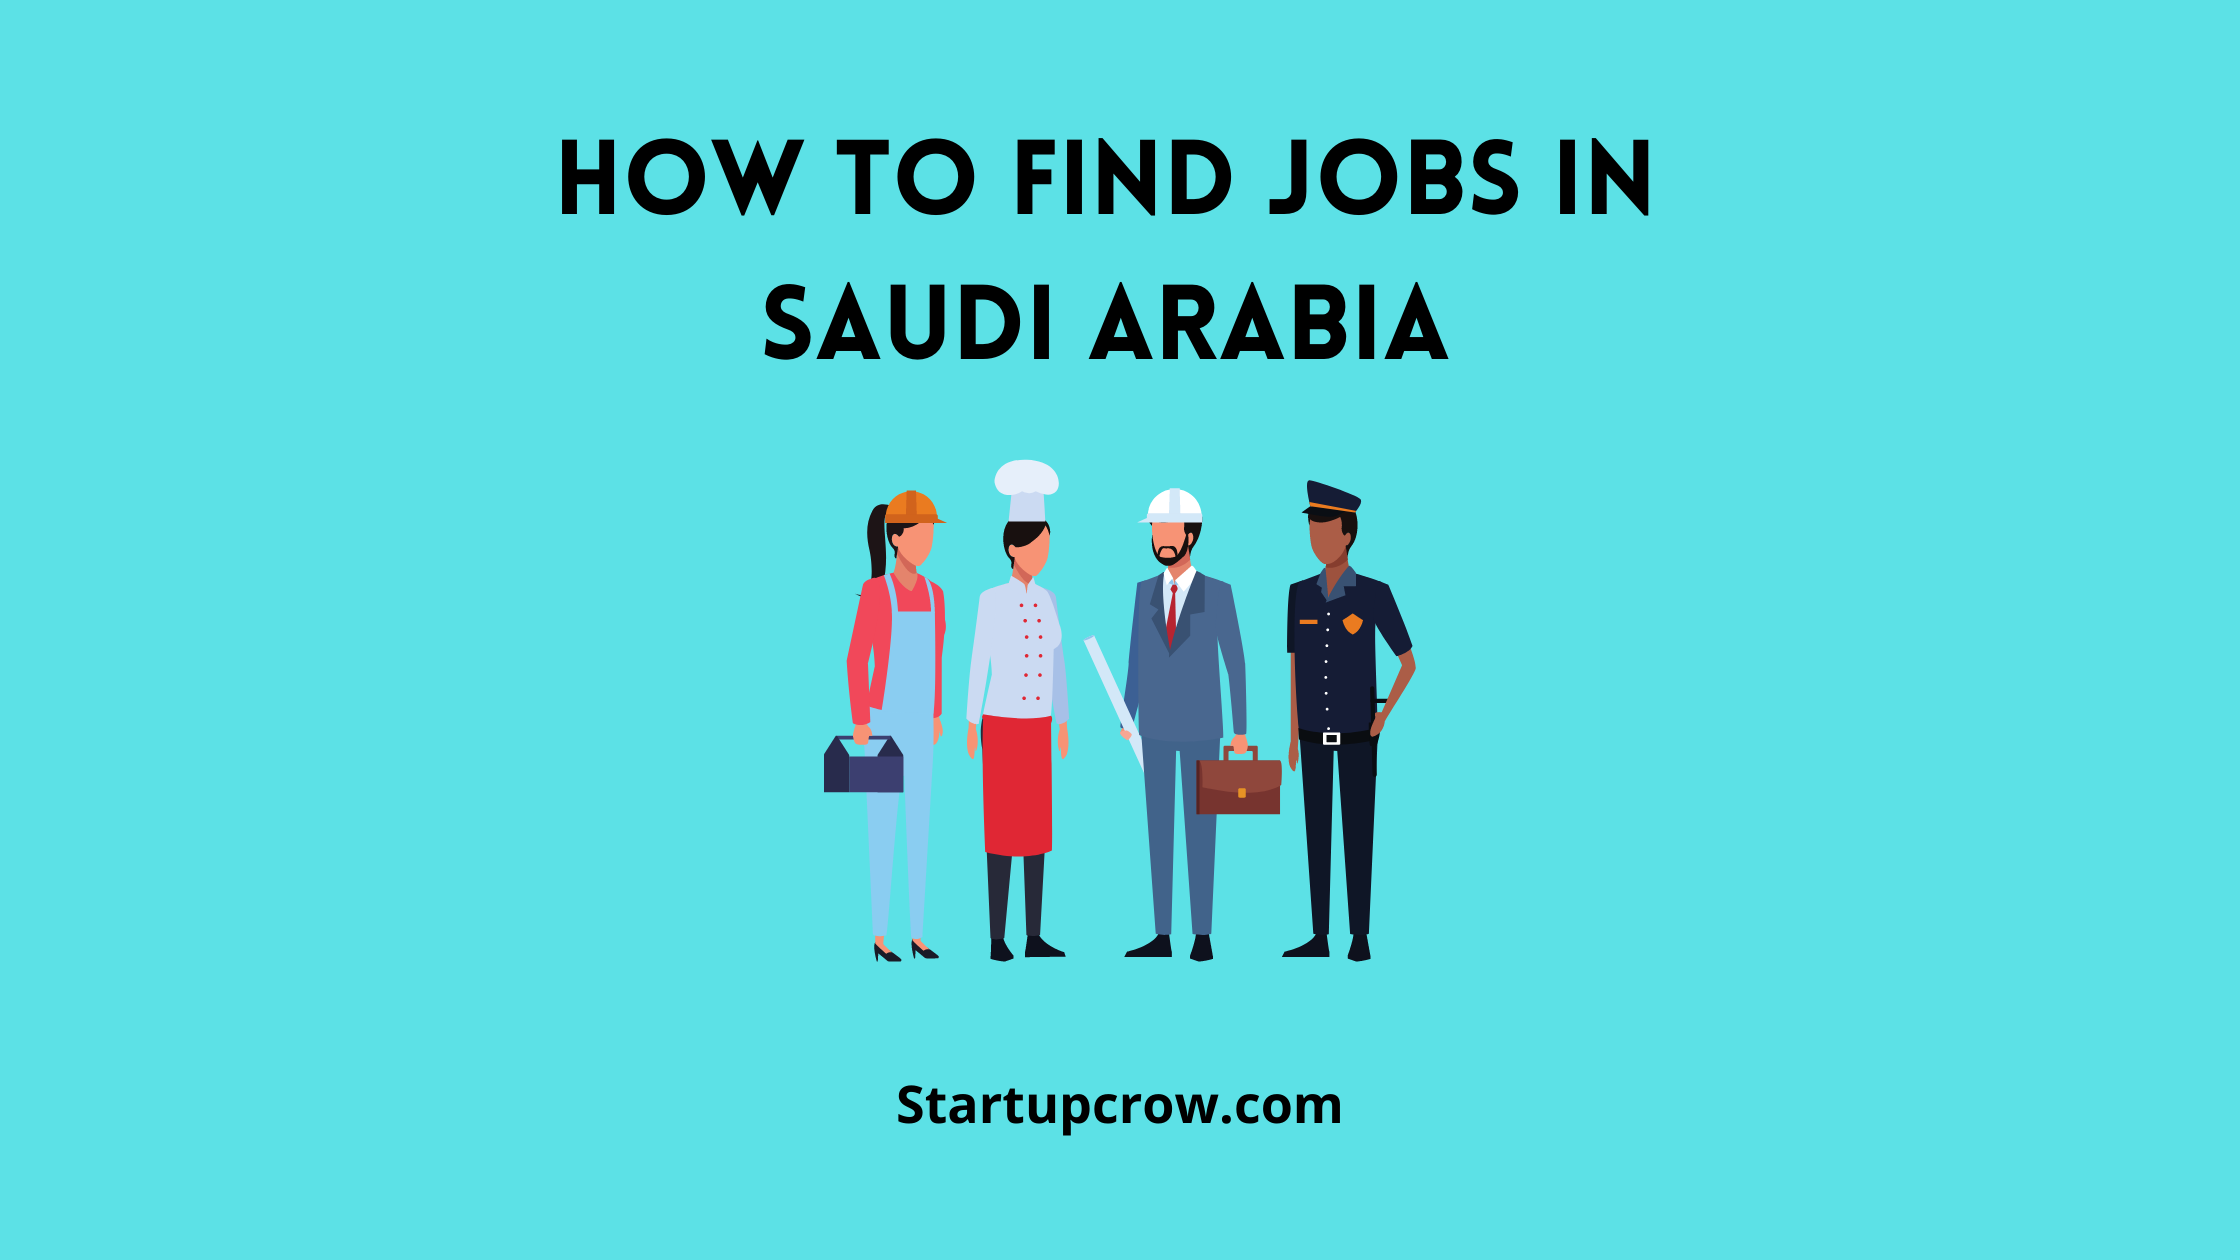 phd economics jobs in saudi arabia